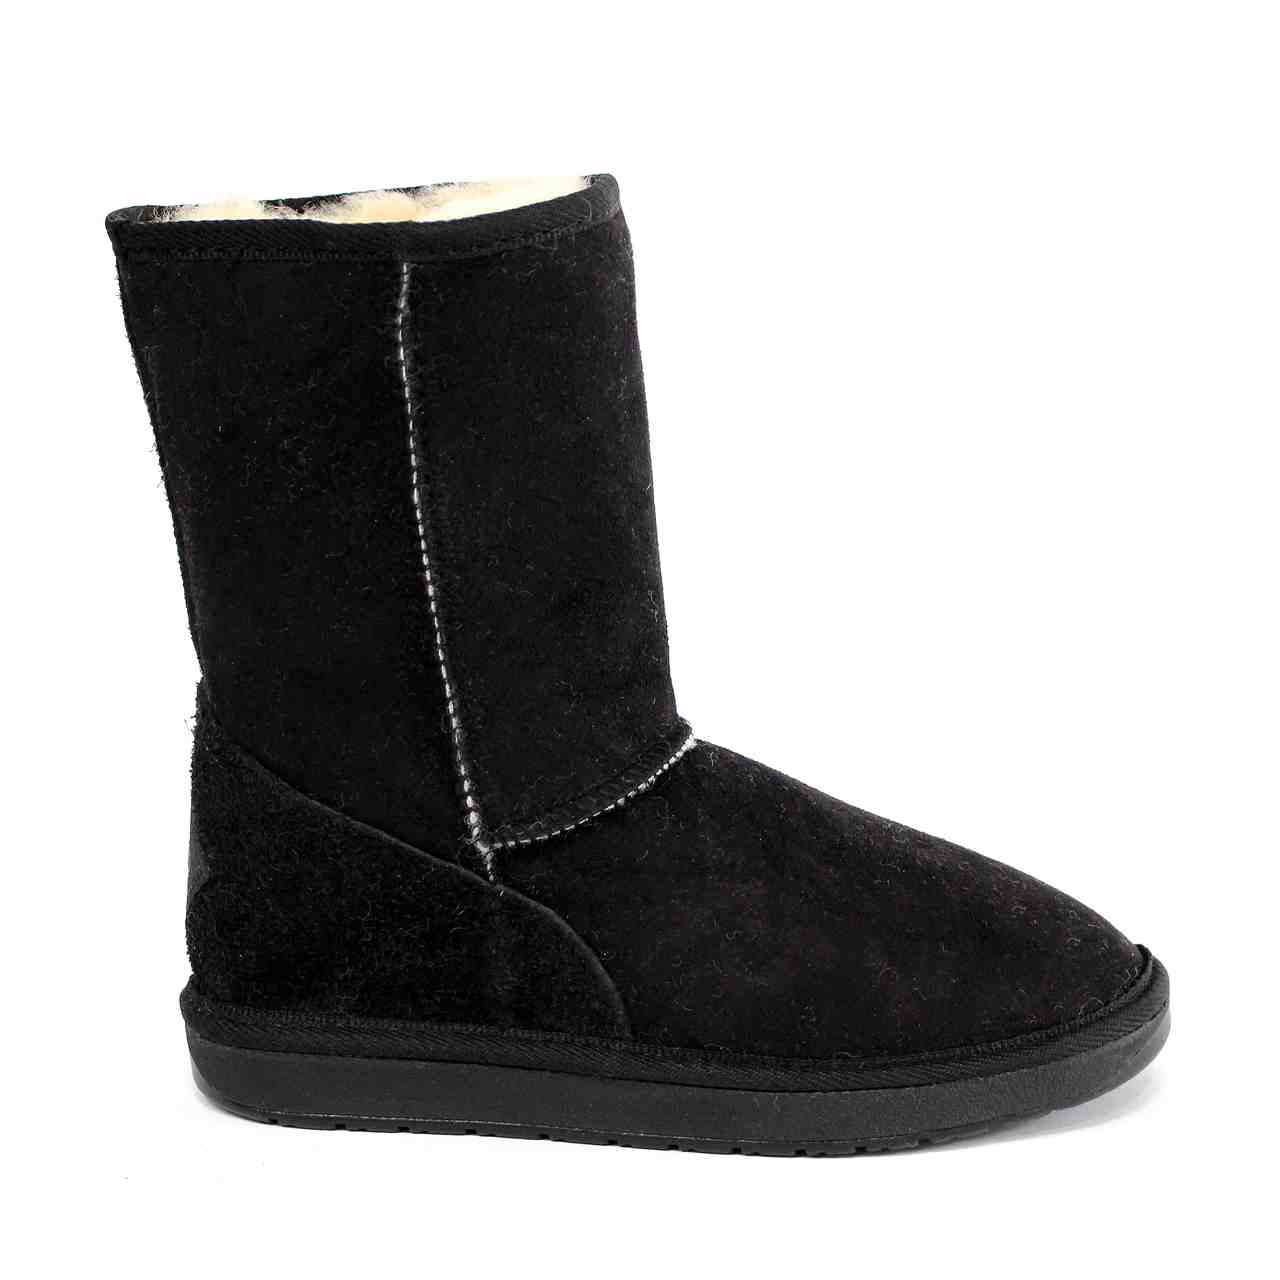 Tidal 3/4 Ugg Boots (Black)